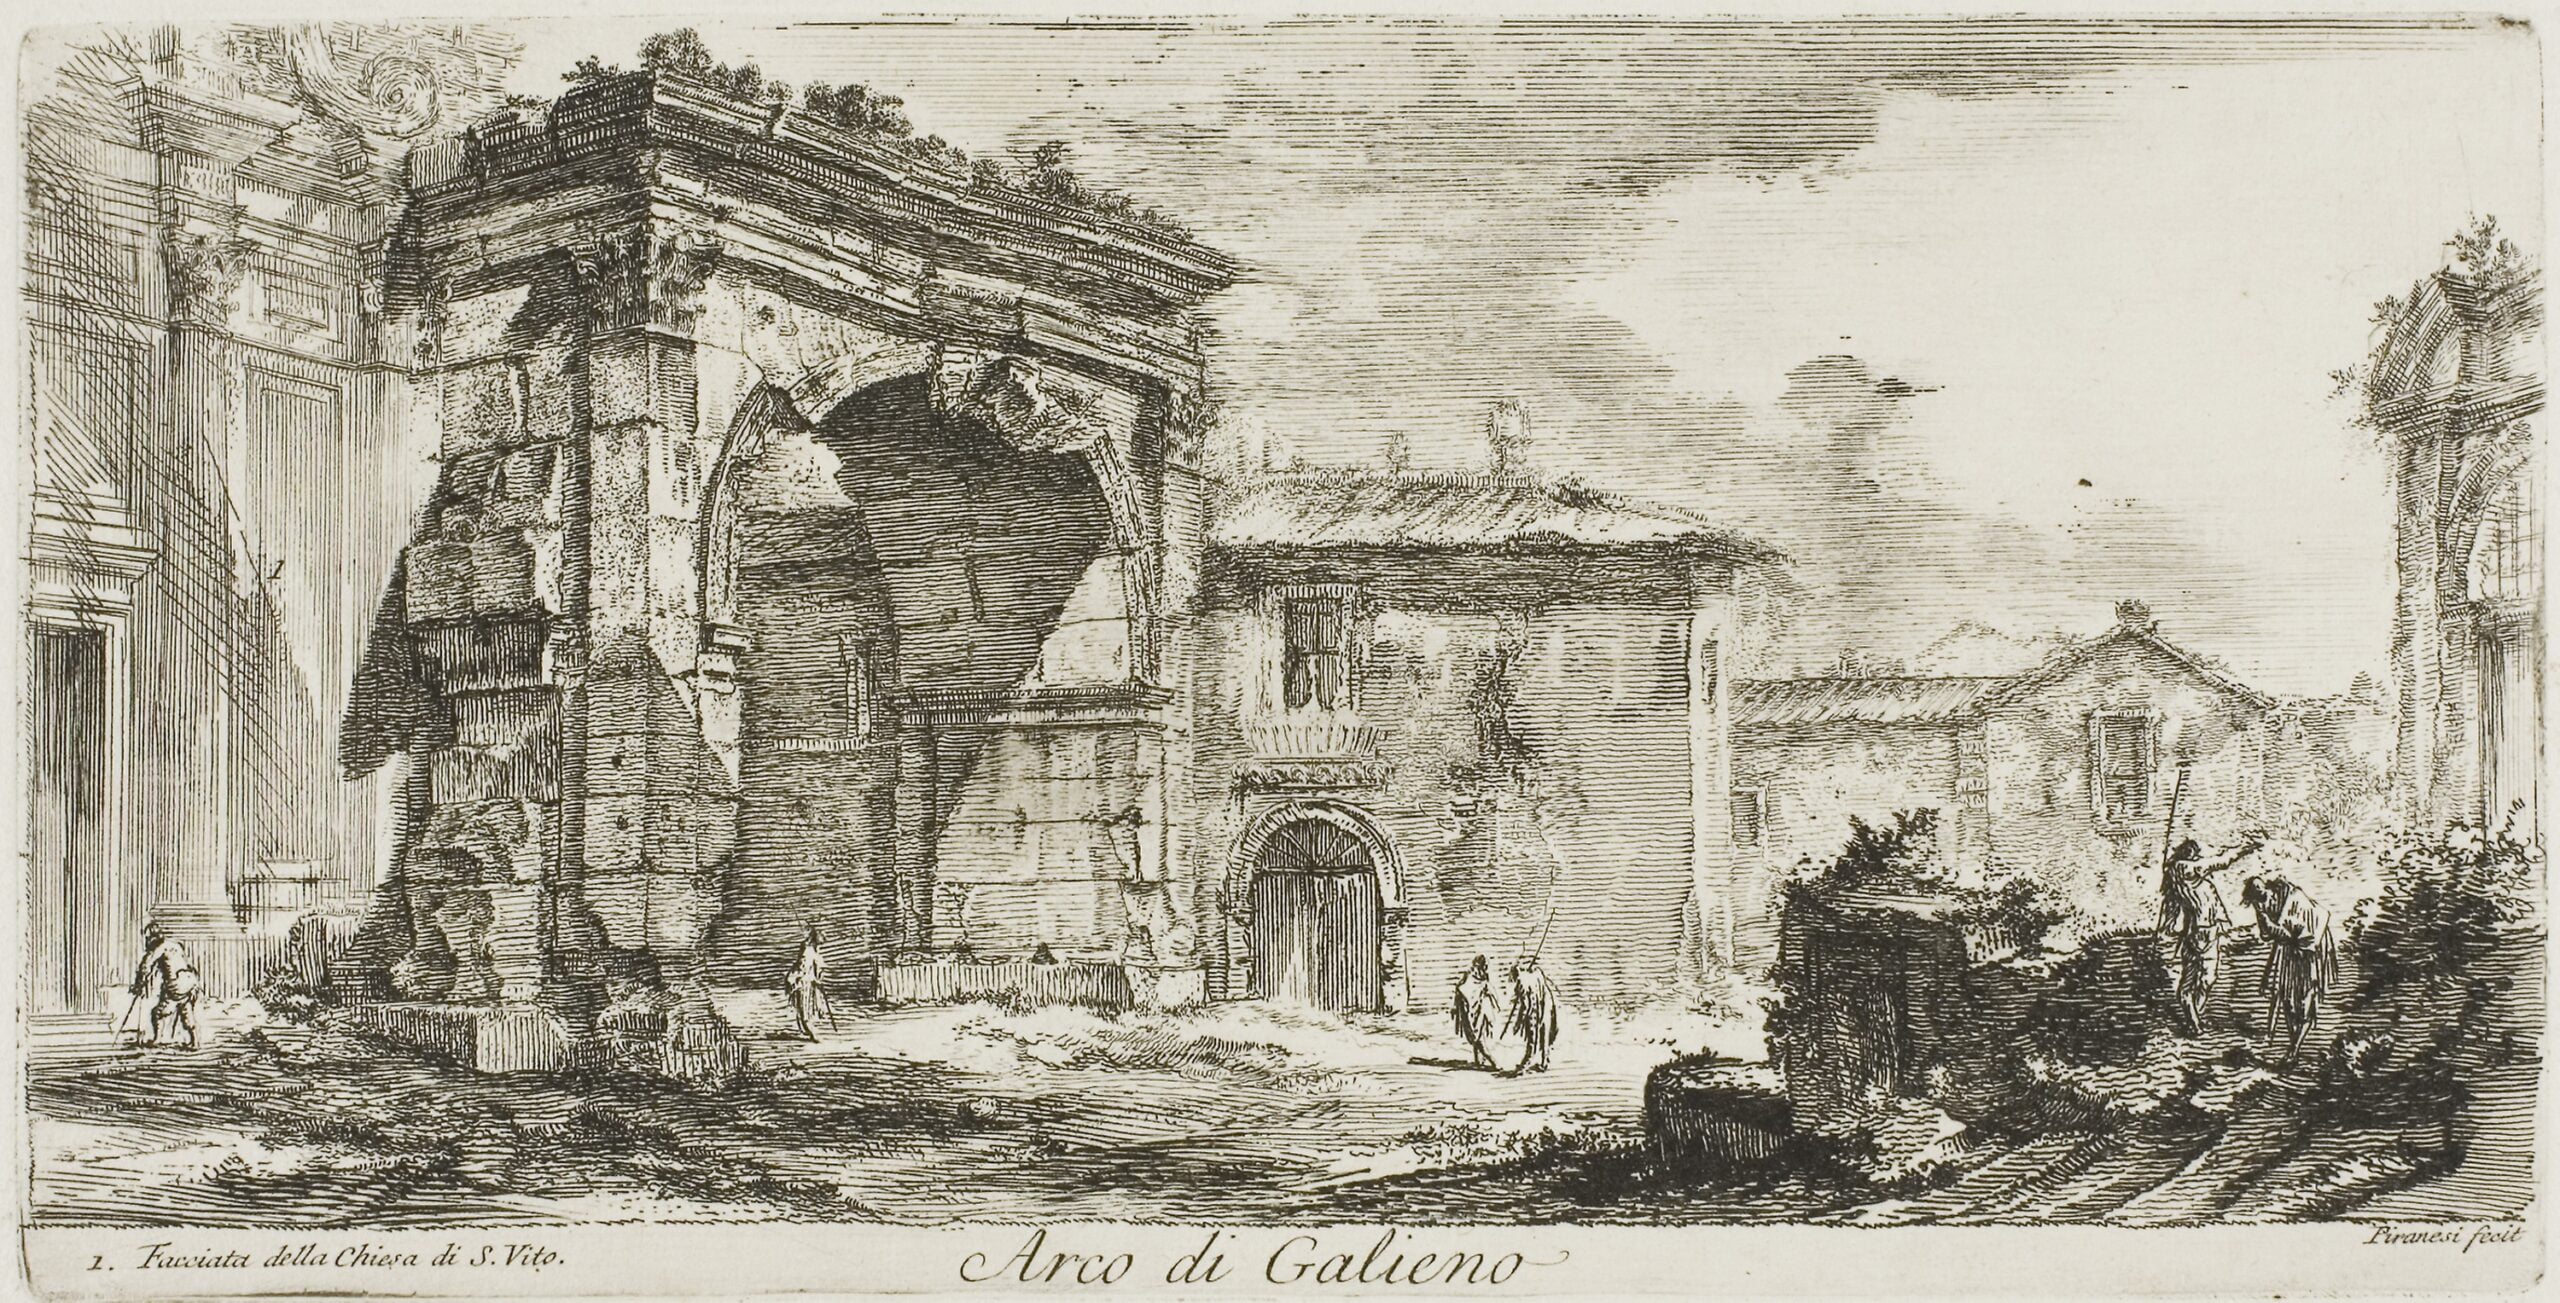 Piranesi, Arch of Galienus